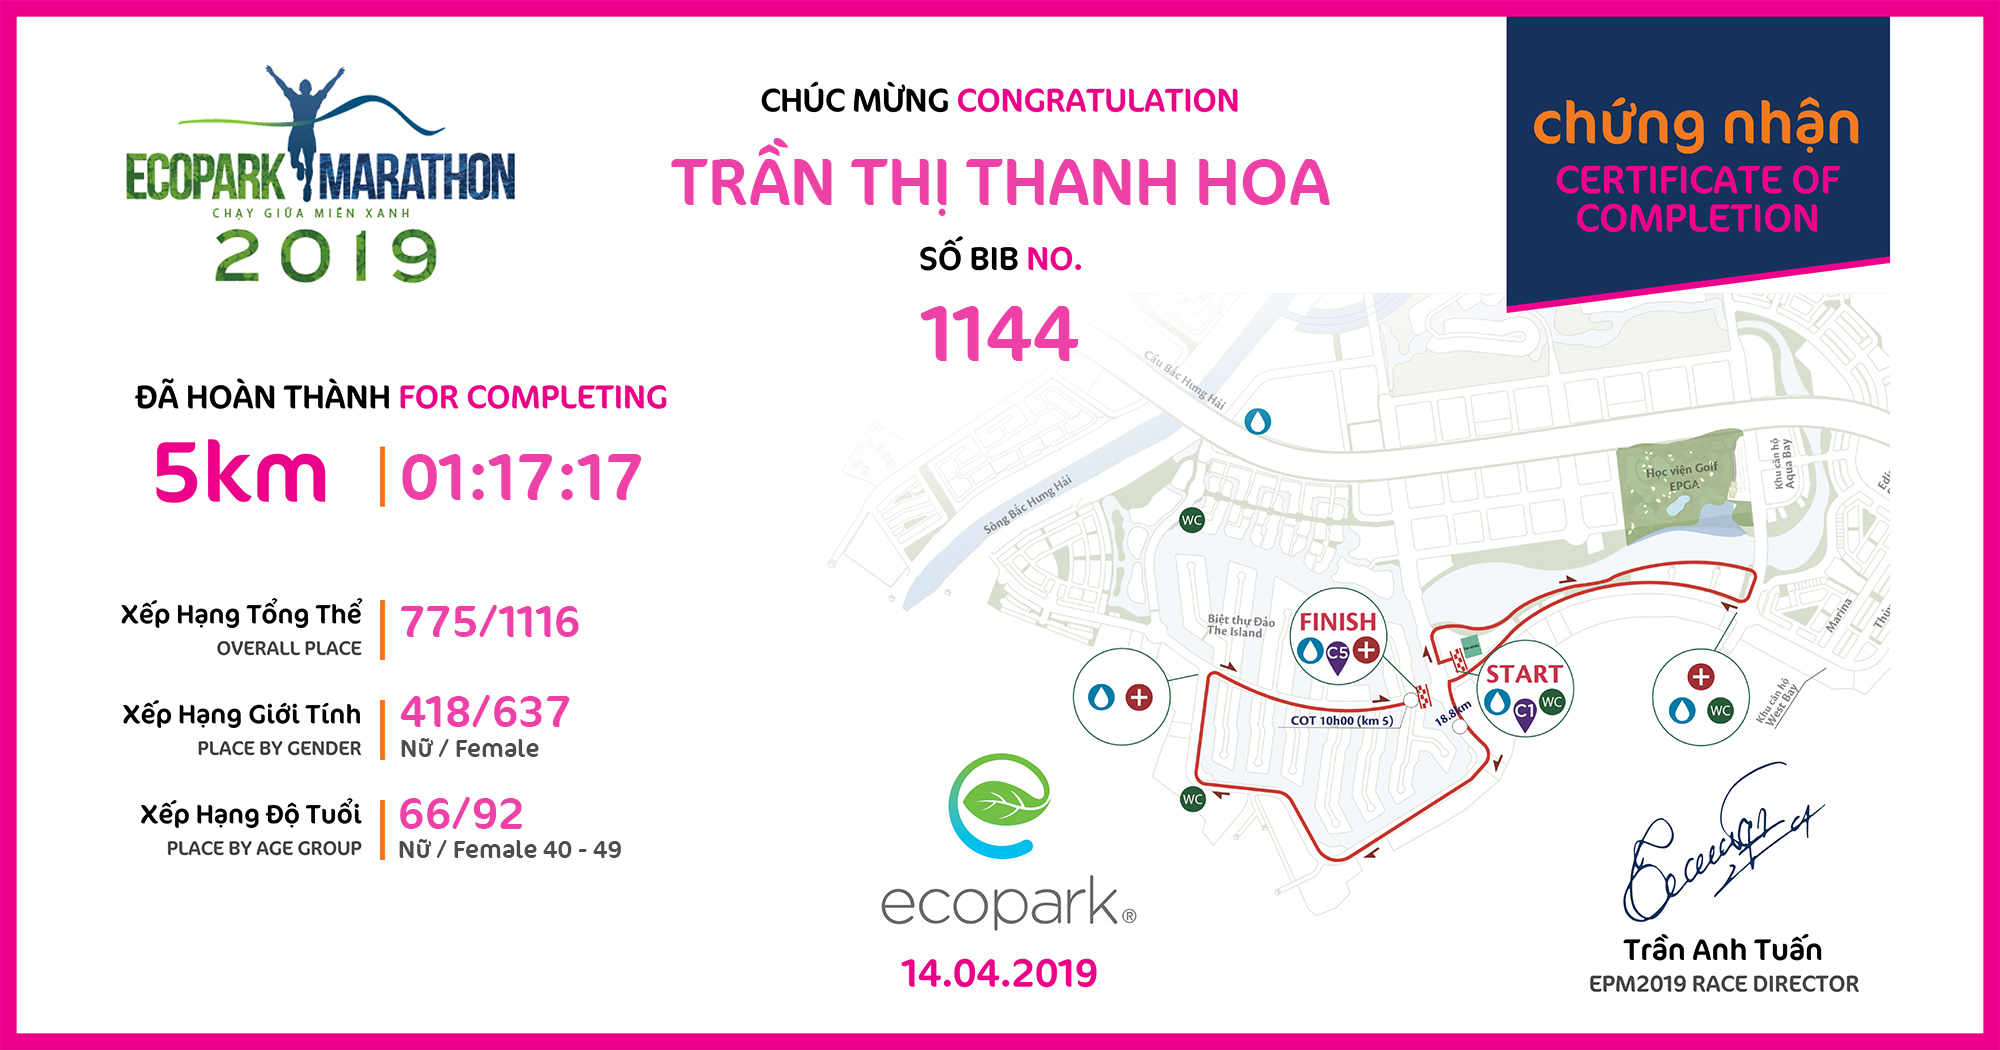 1144 - Trần Thị Thanh Hoa